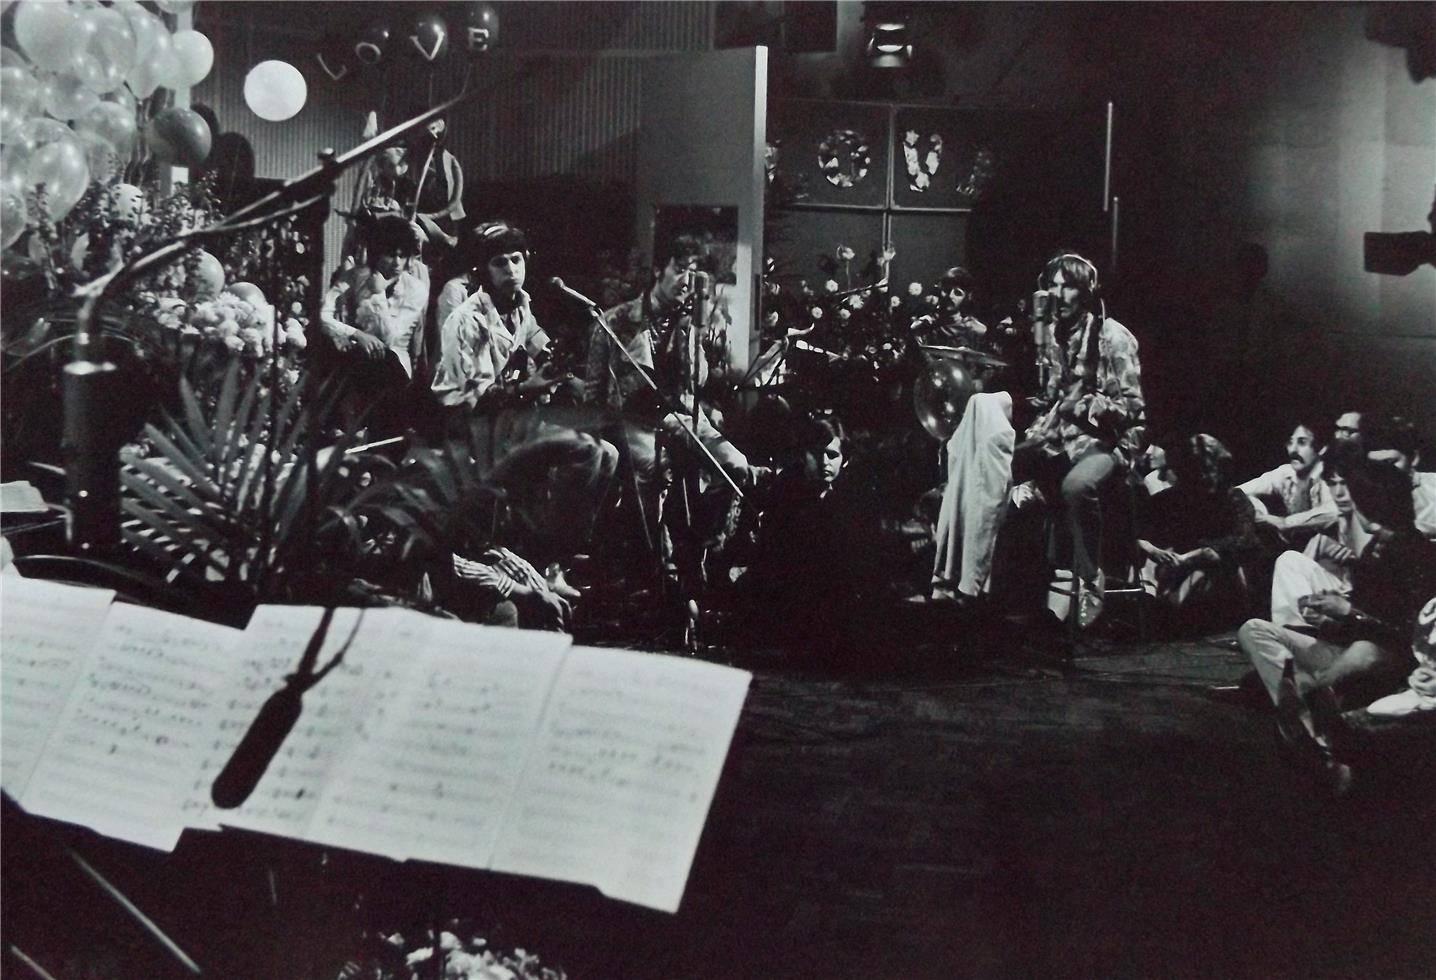 David Mangus Black and White Photograph - The Beatles, Abbey Road Studios, London, 1967